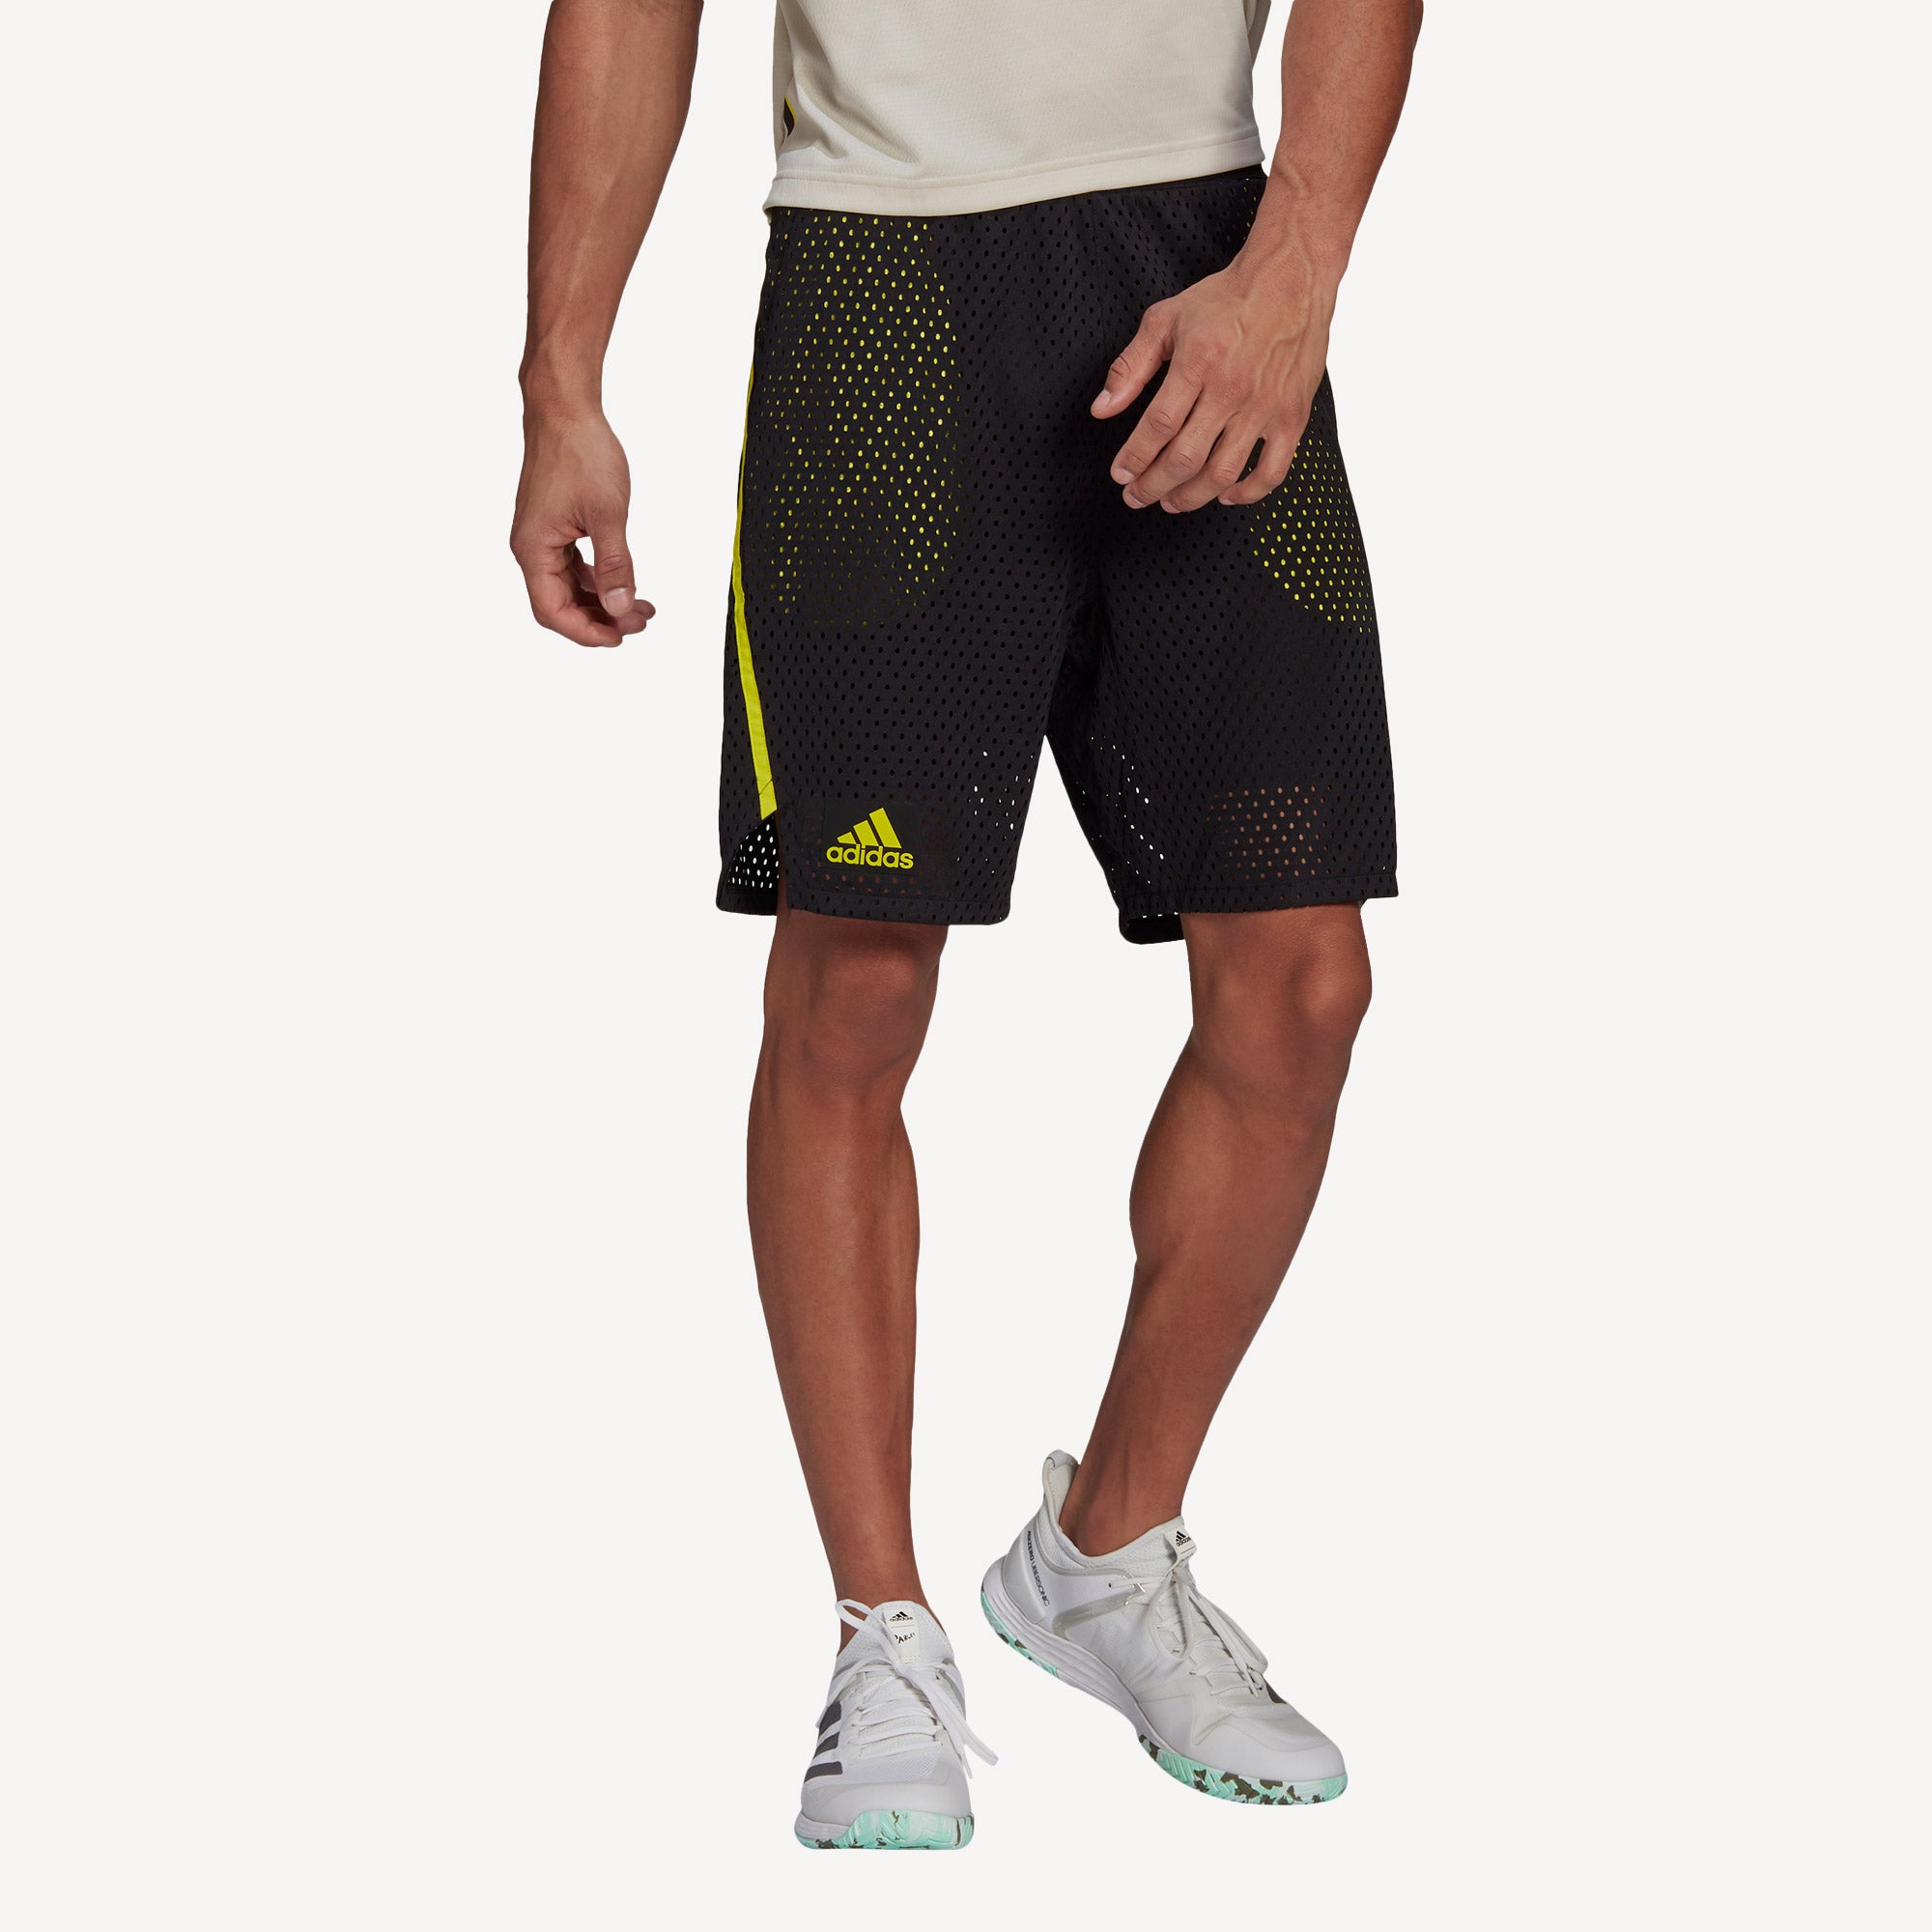 adidas Primeblue Heat Ready Men's 2IN1 9-Inch Tennis Shorts Black (1)